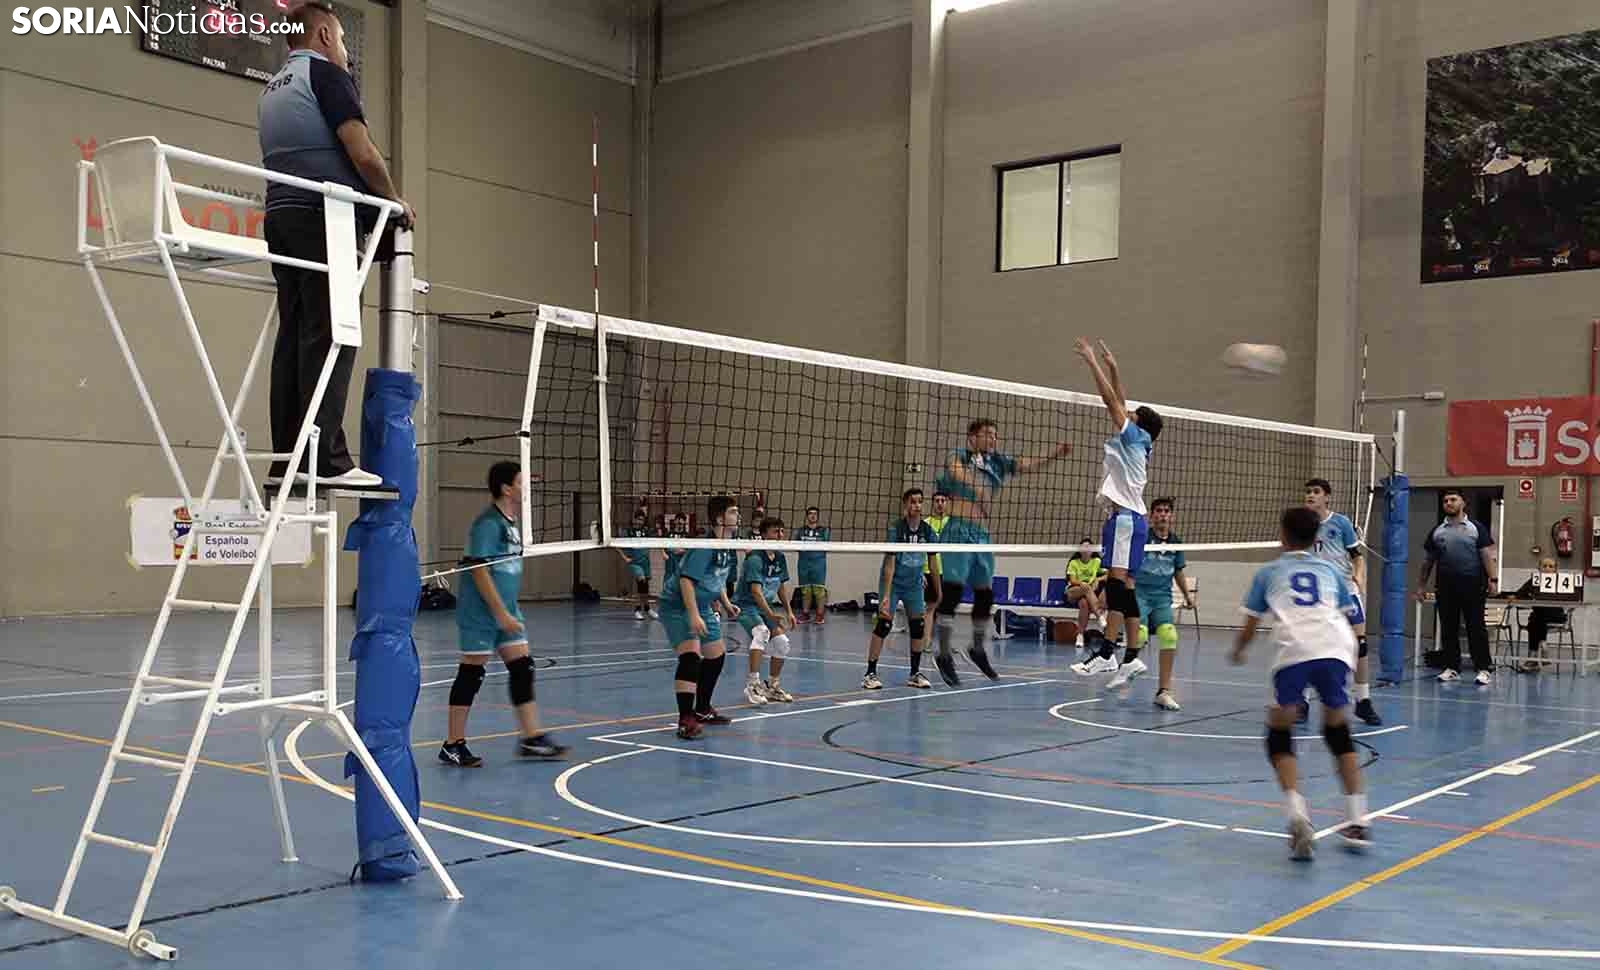 FOTOS: Arranca la fiesta del voleibol nacional de cantera en Soria